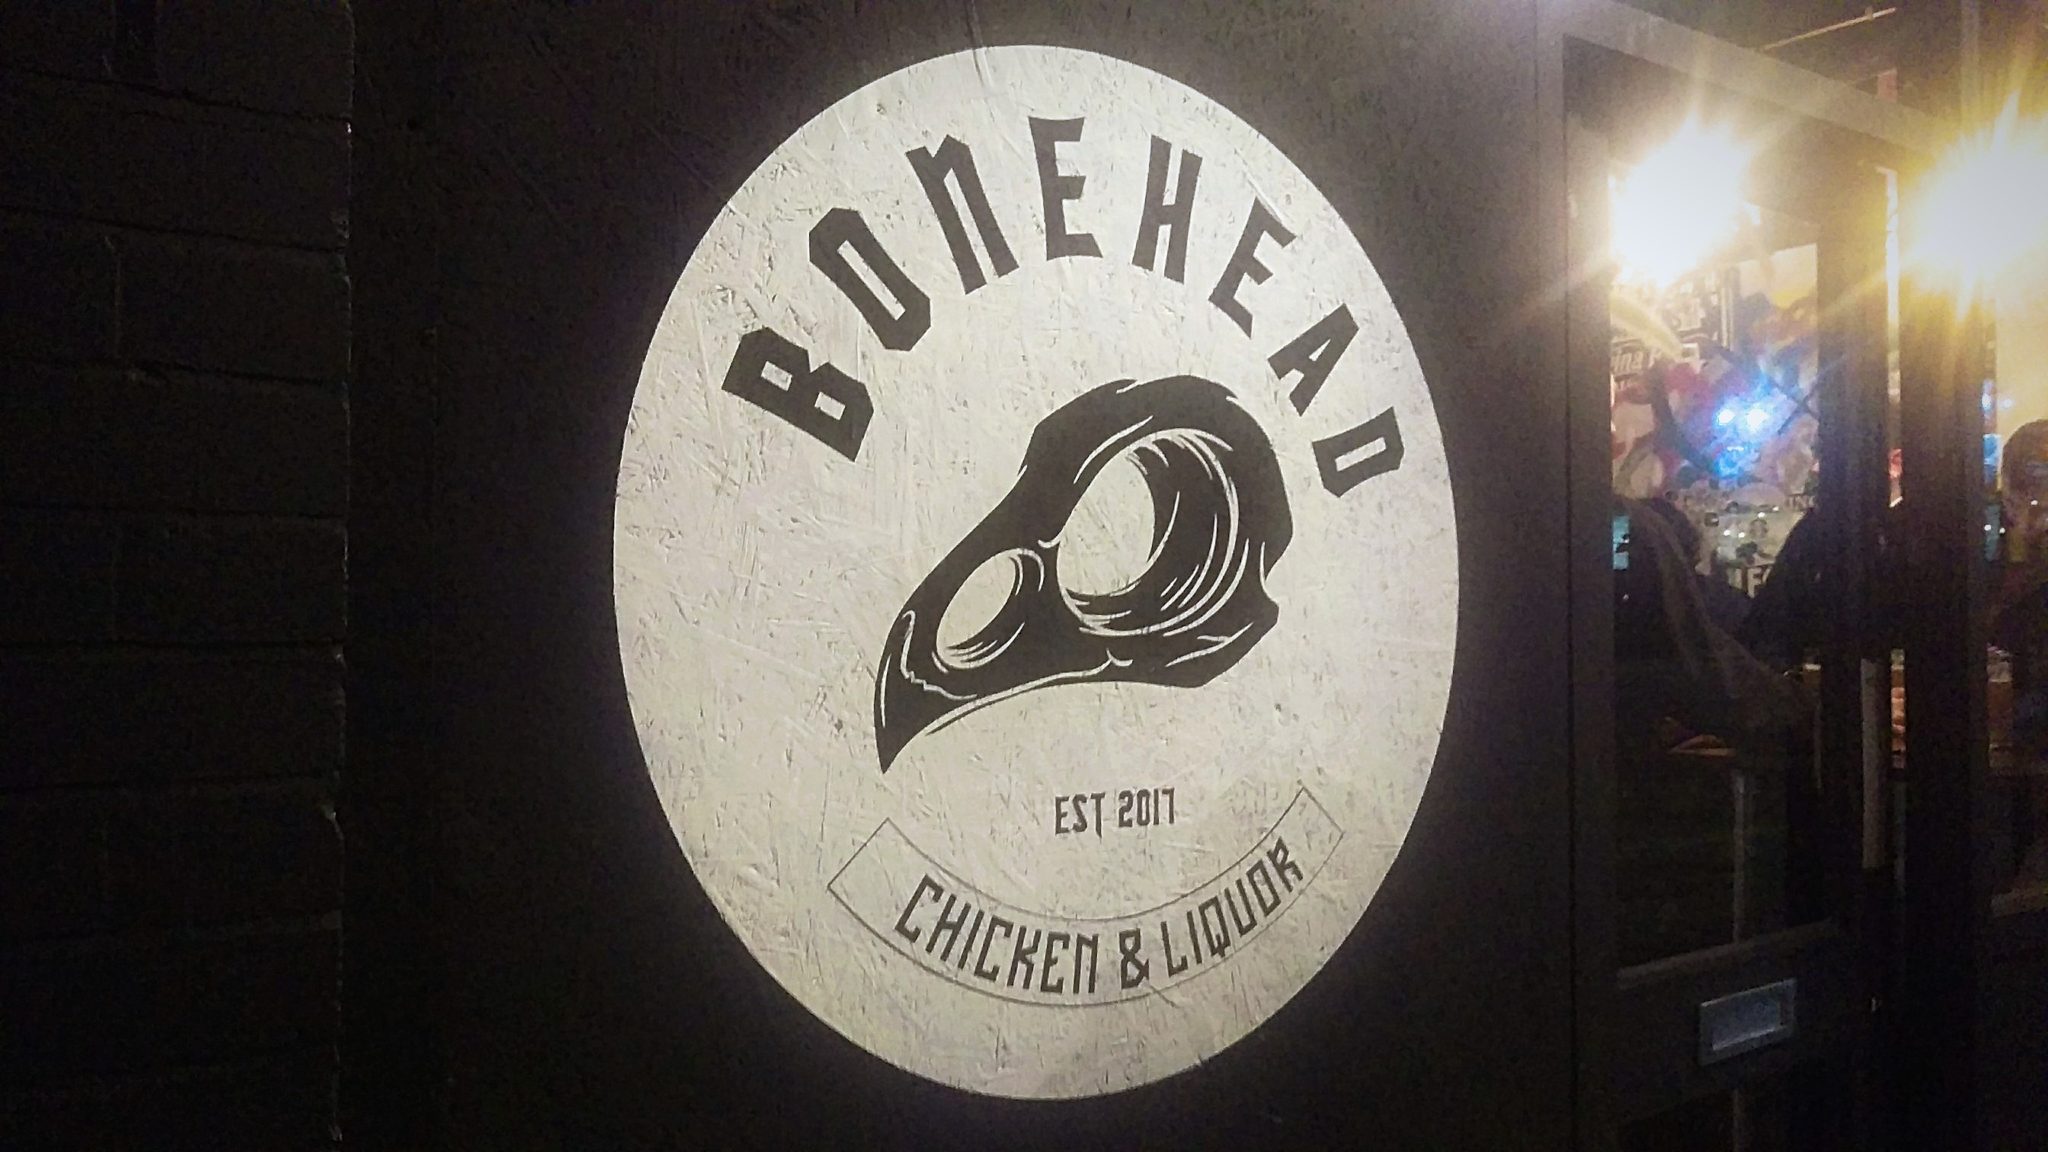 Bonehead - Chicken & Liquor